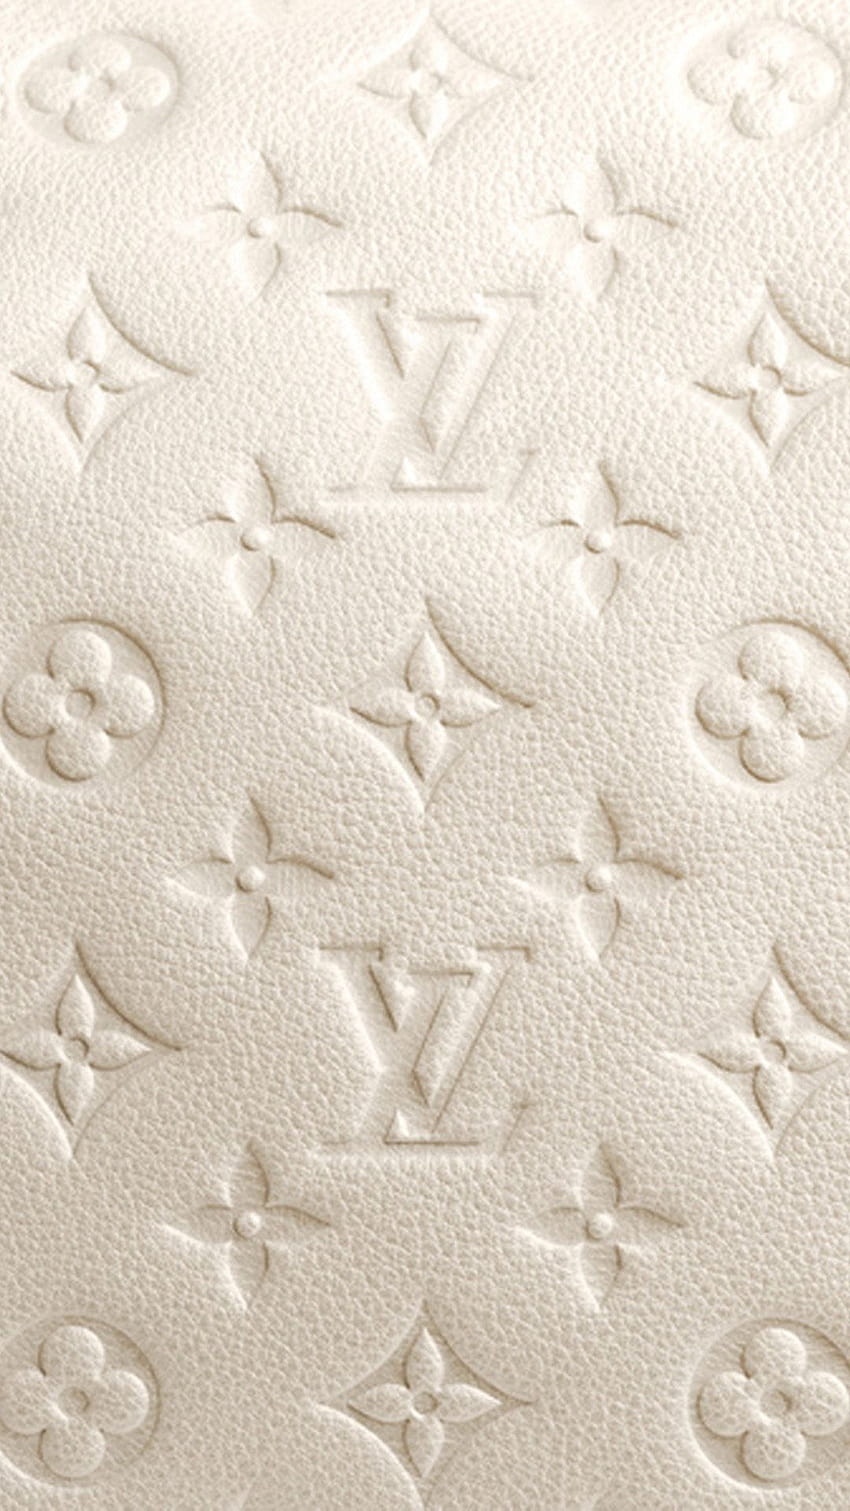 Louie Vuitton Group, luxury brands iphone HD phone wallpaper